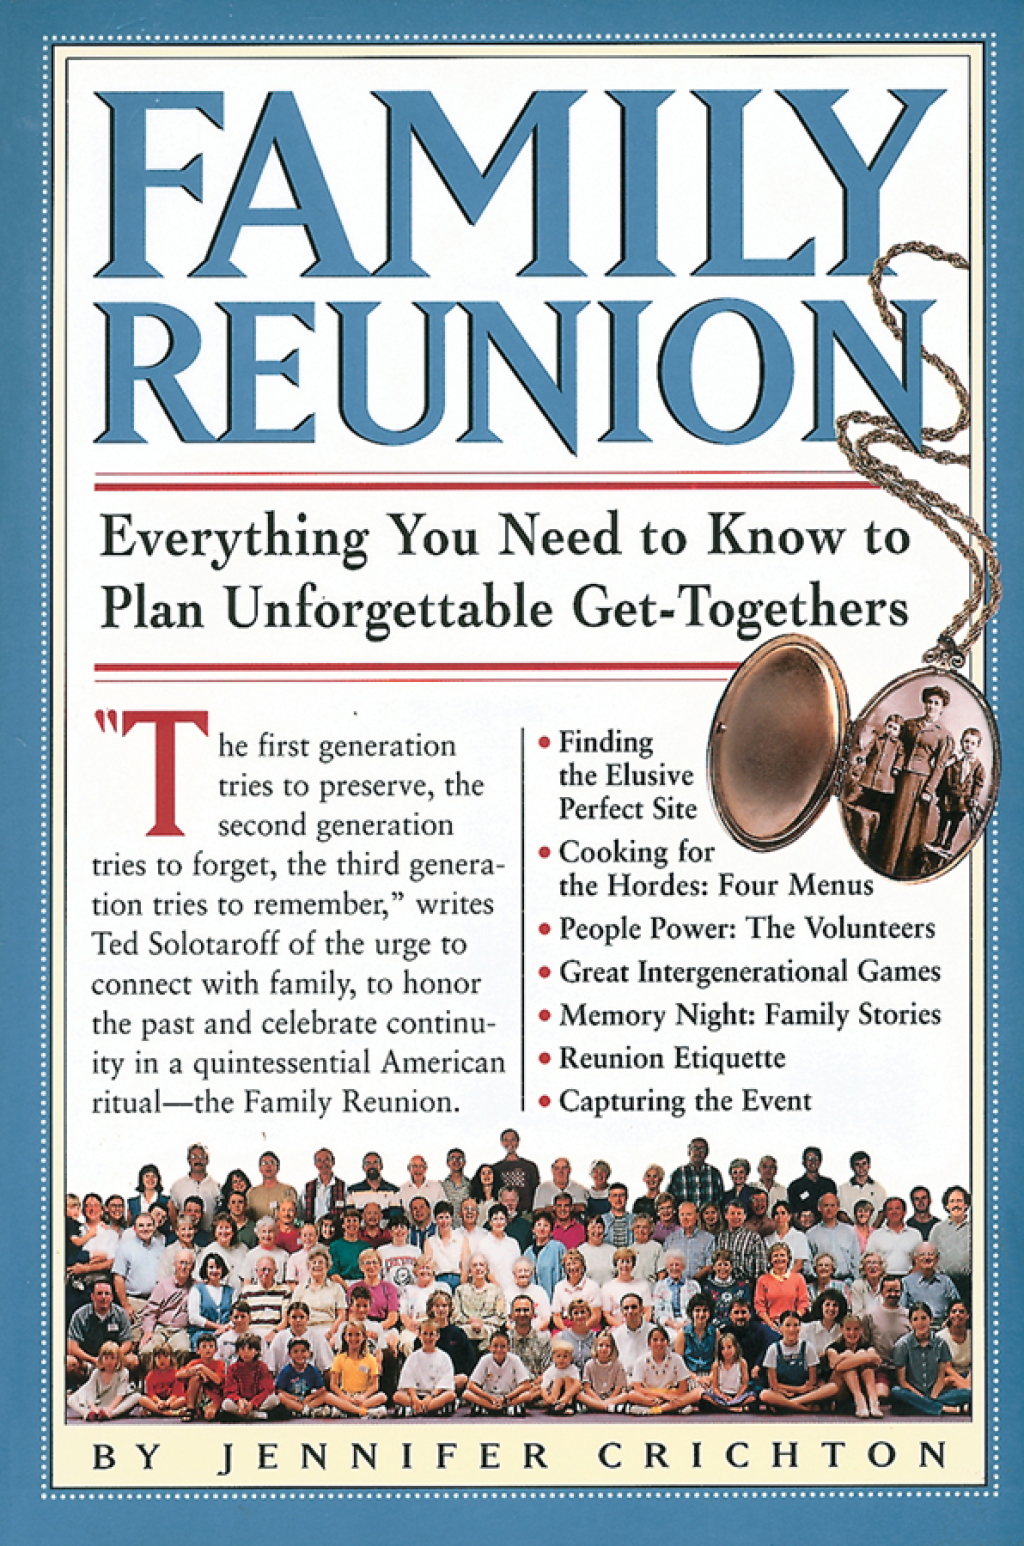 Family Reunion (eBook) - Jennifer Crichton,